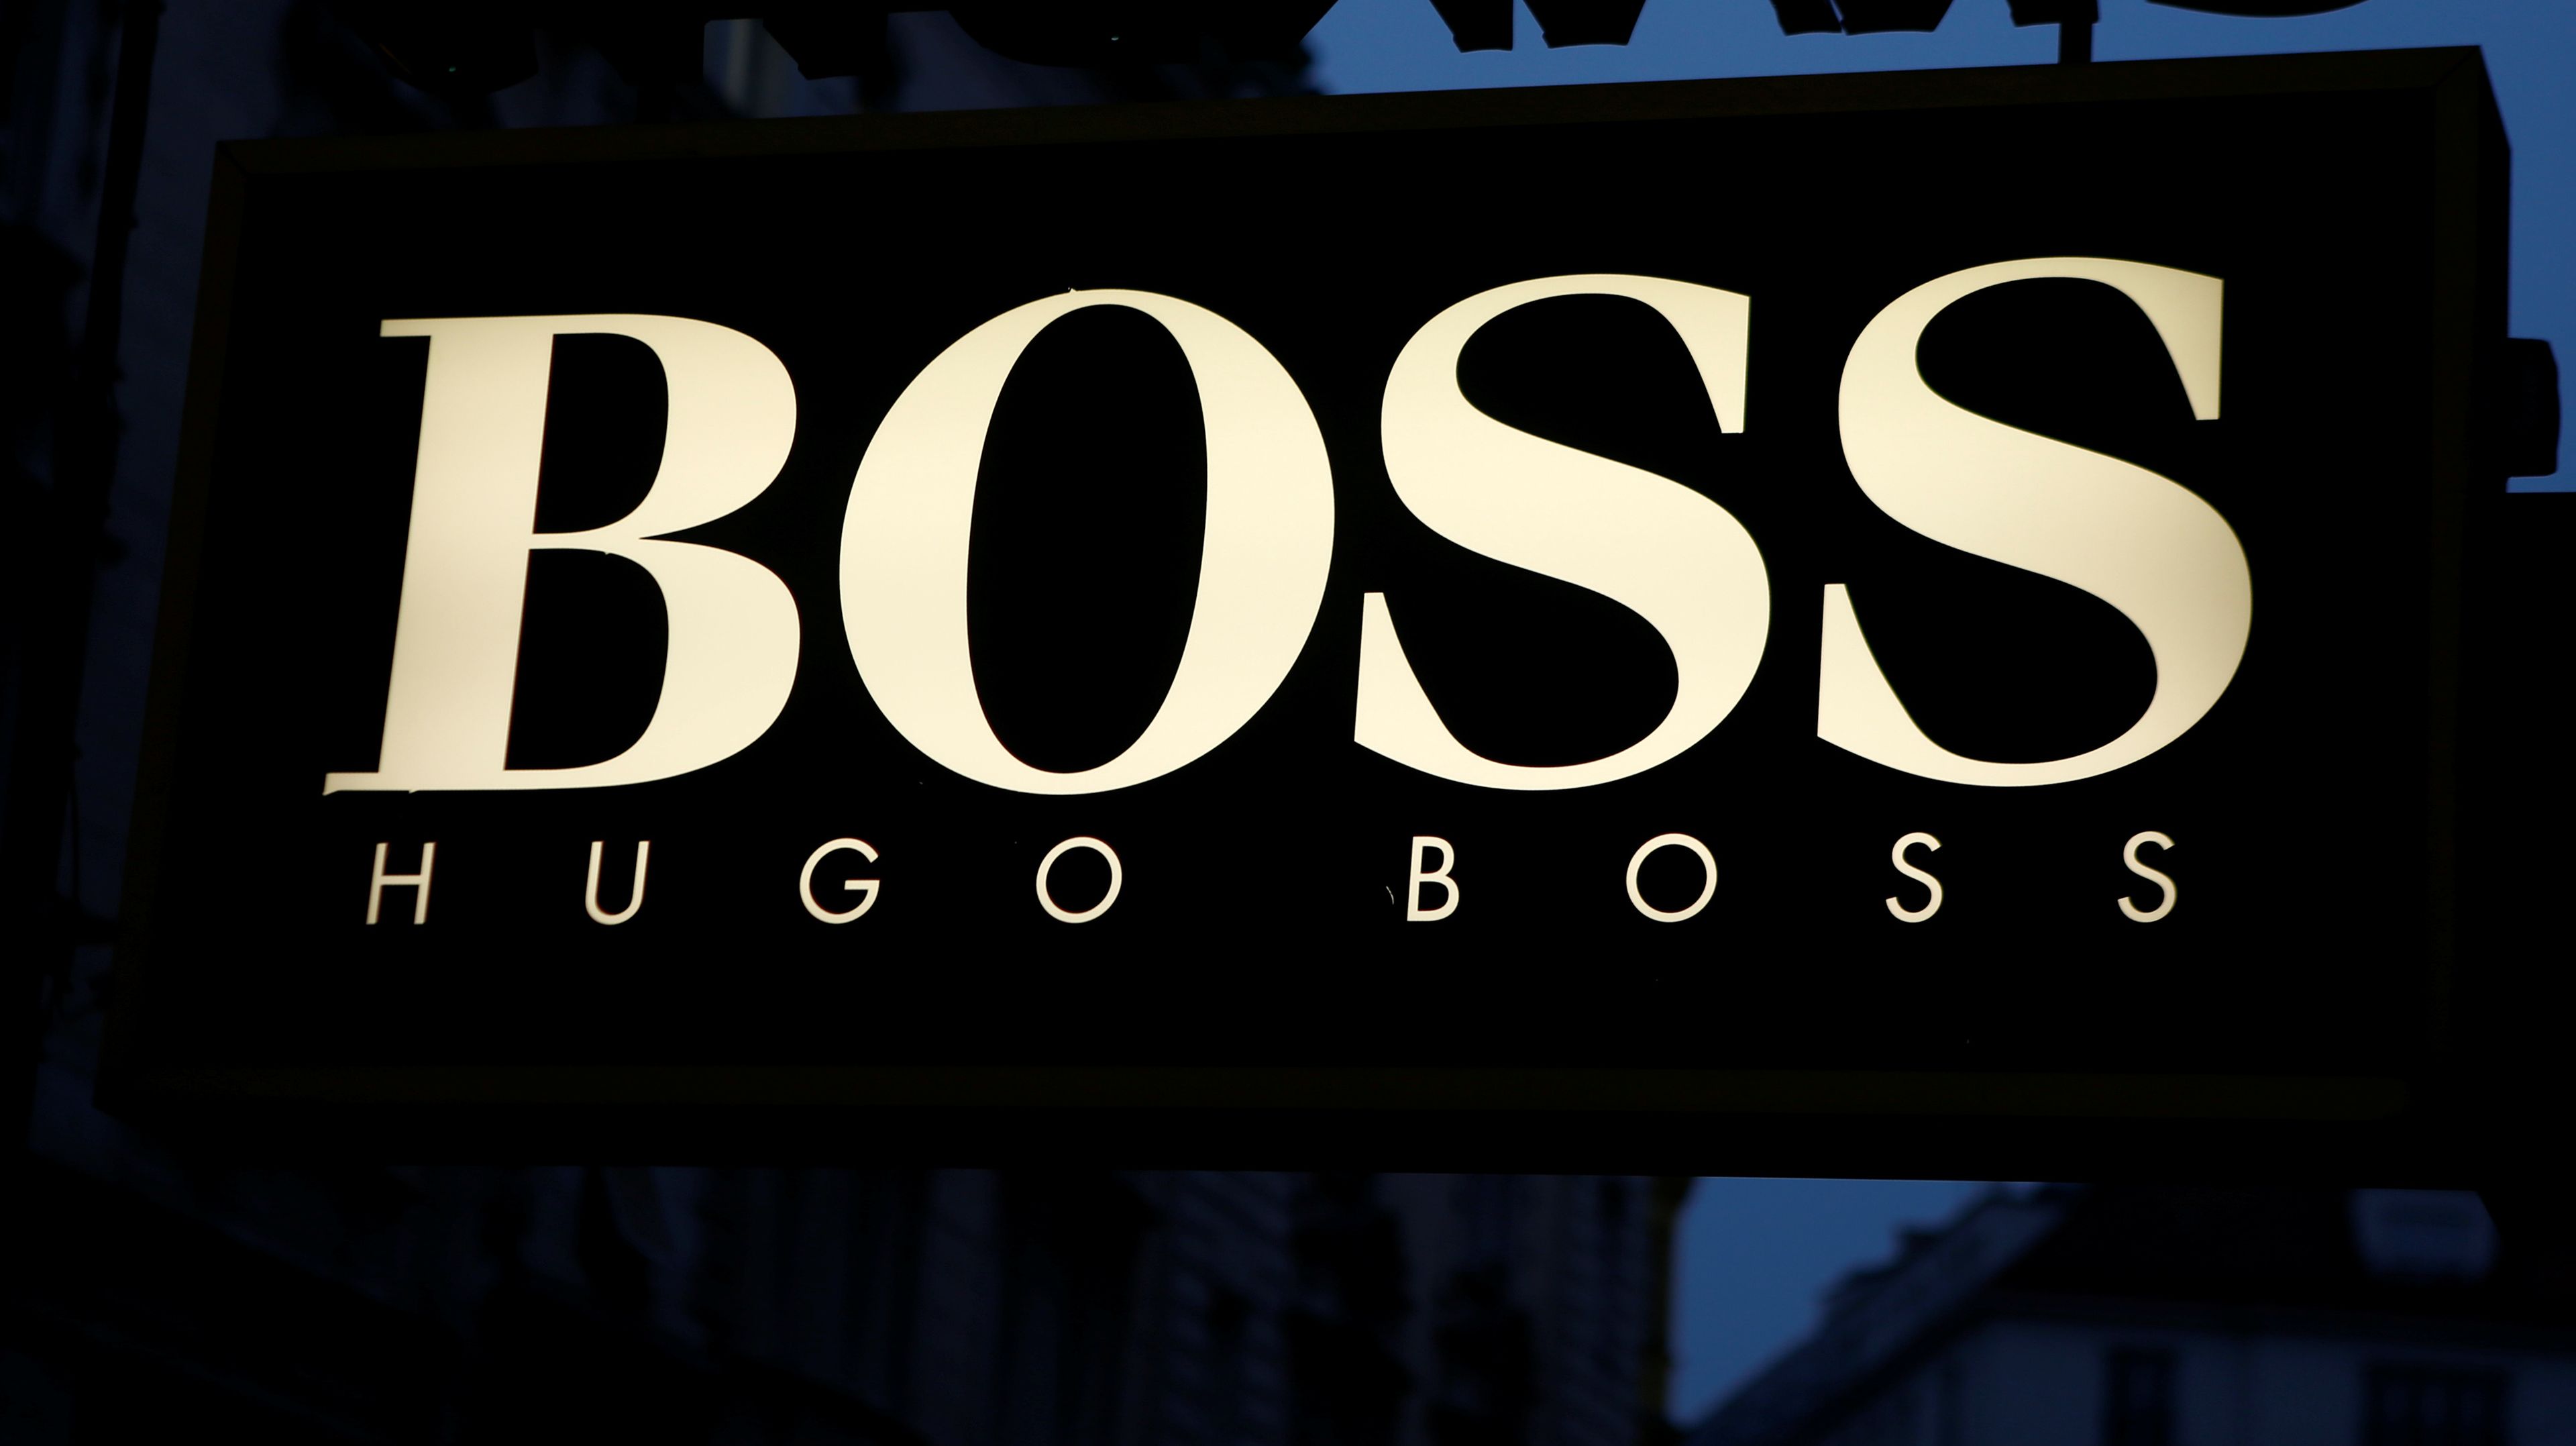 Marca Hugo Boss.